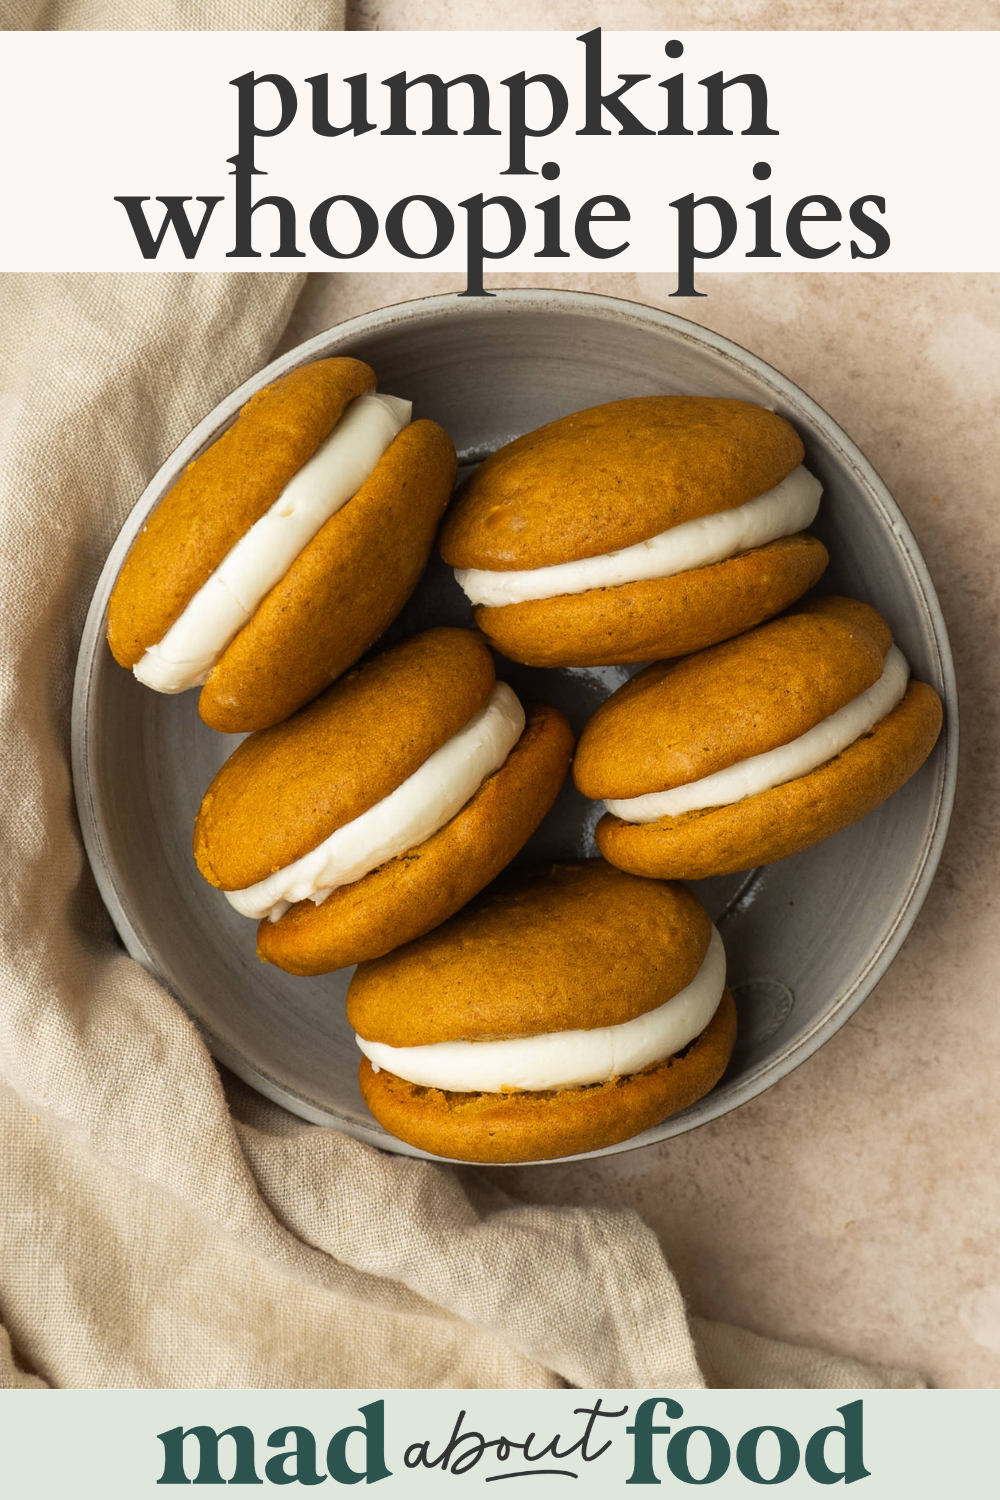 Image for pinning pumpkin whoopie pies recipe on Pinterest